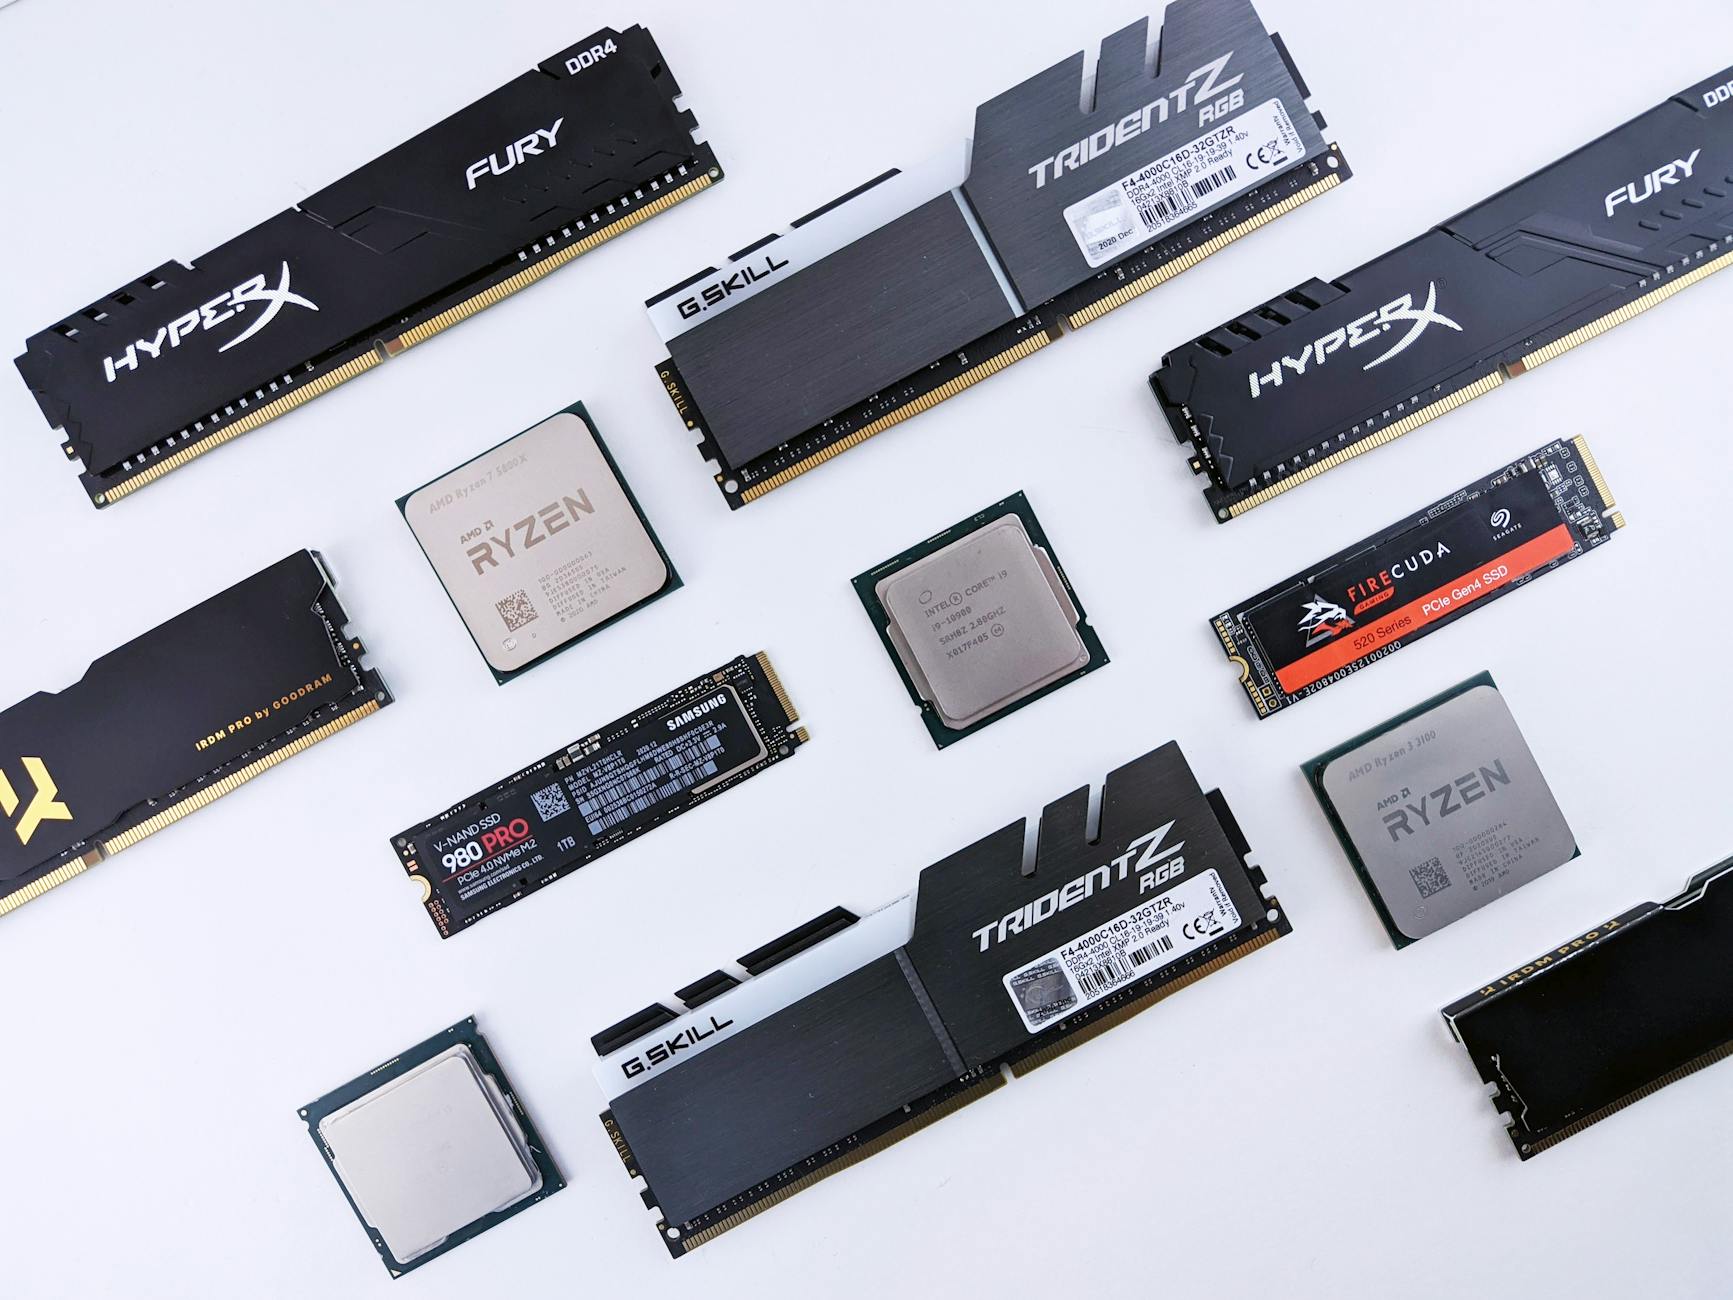 Image of RAM and RYZEN processors.